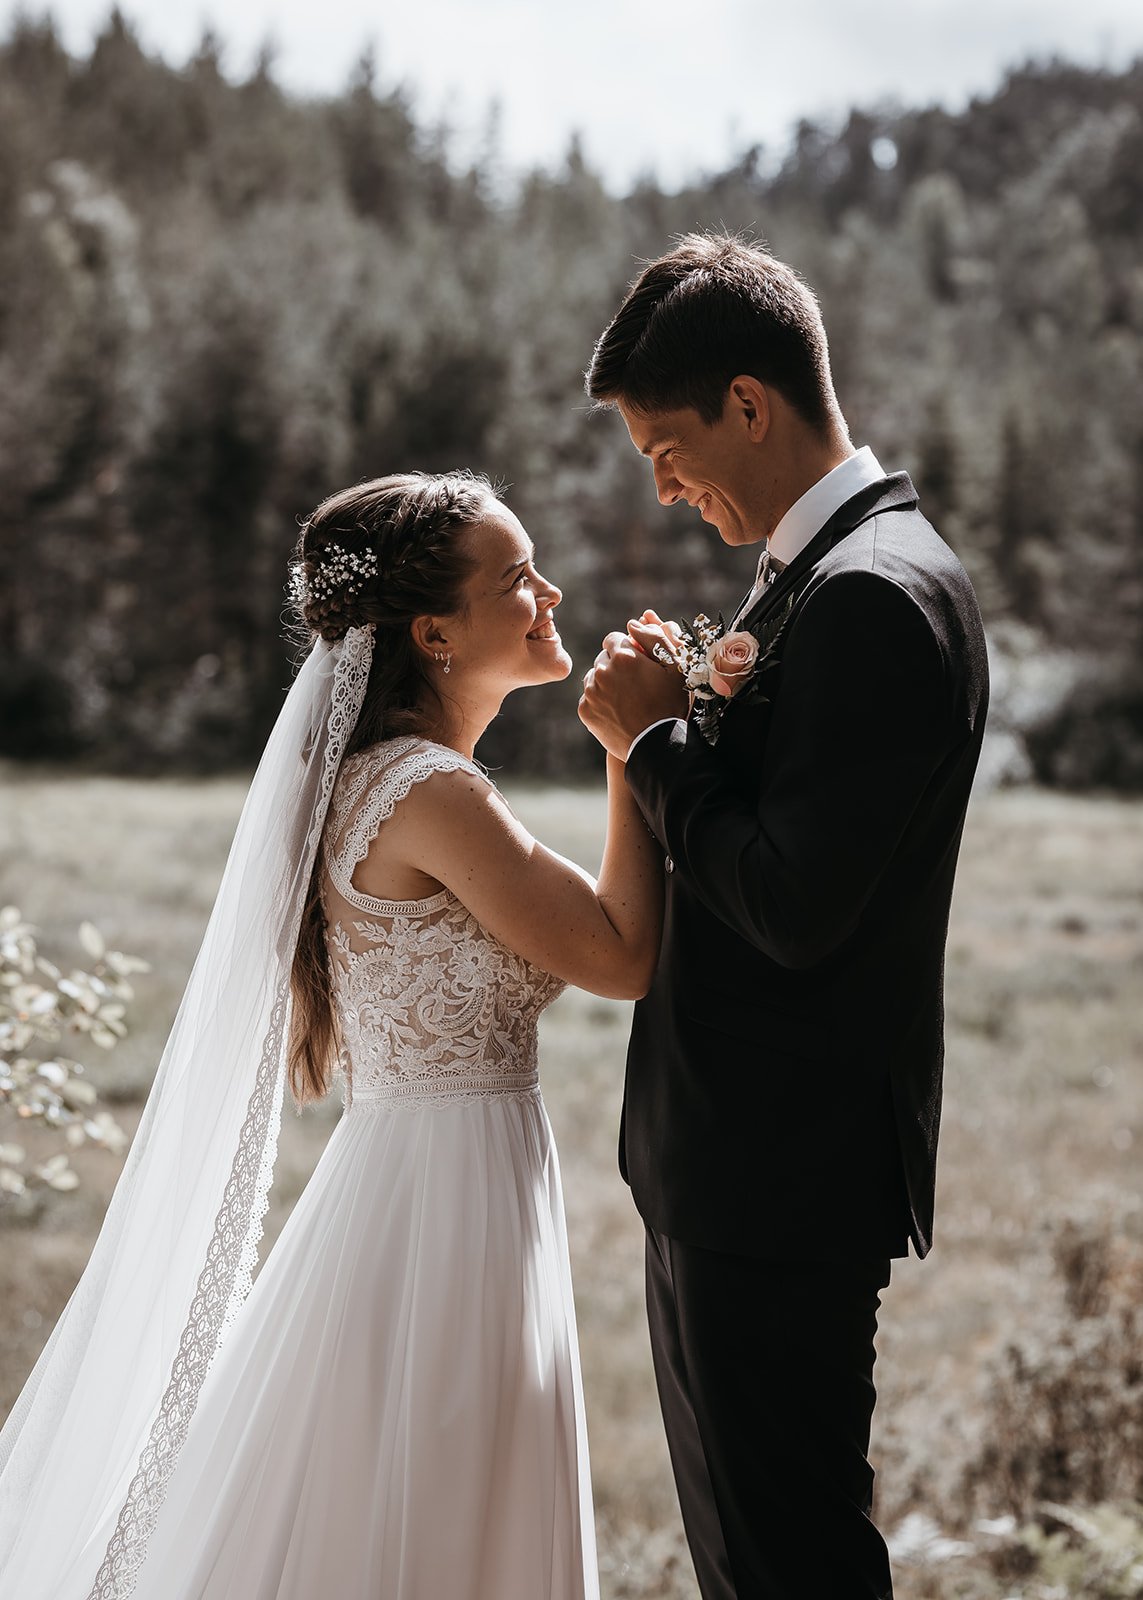 Vakker kjærlighet mellom brudepar i Birkeland